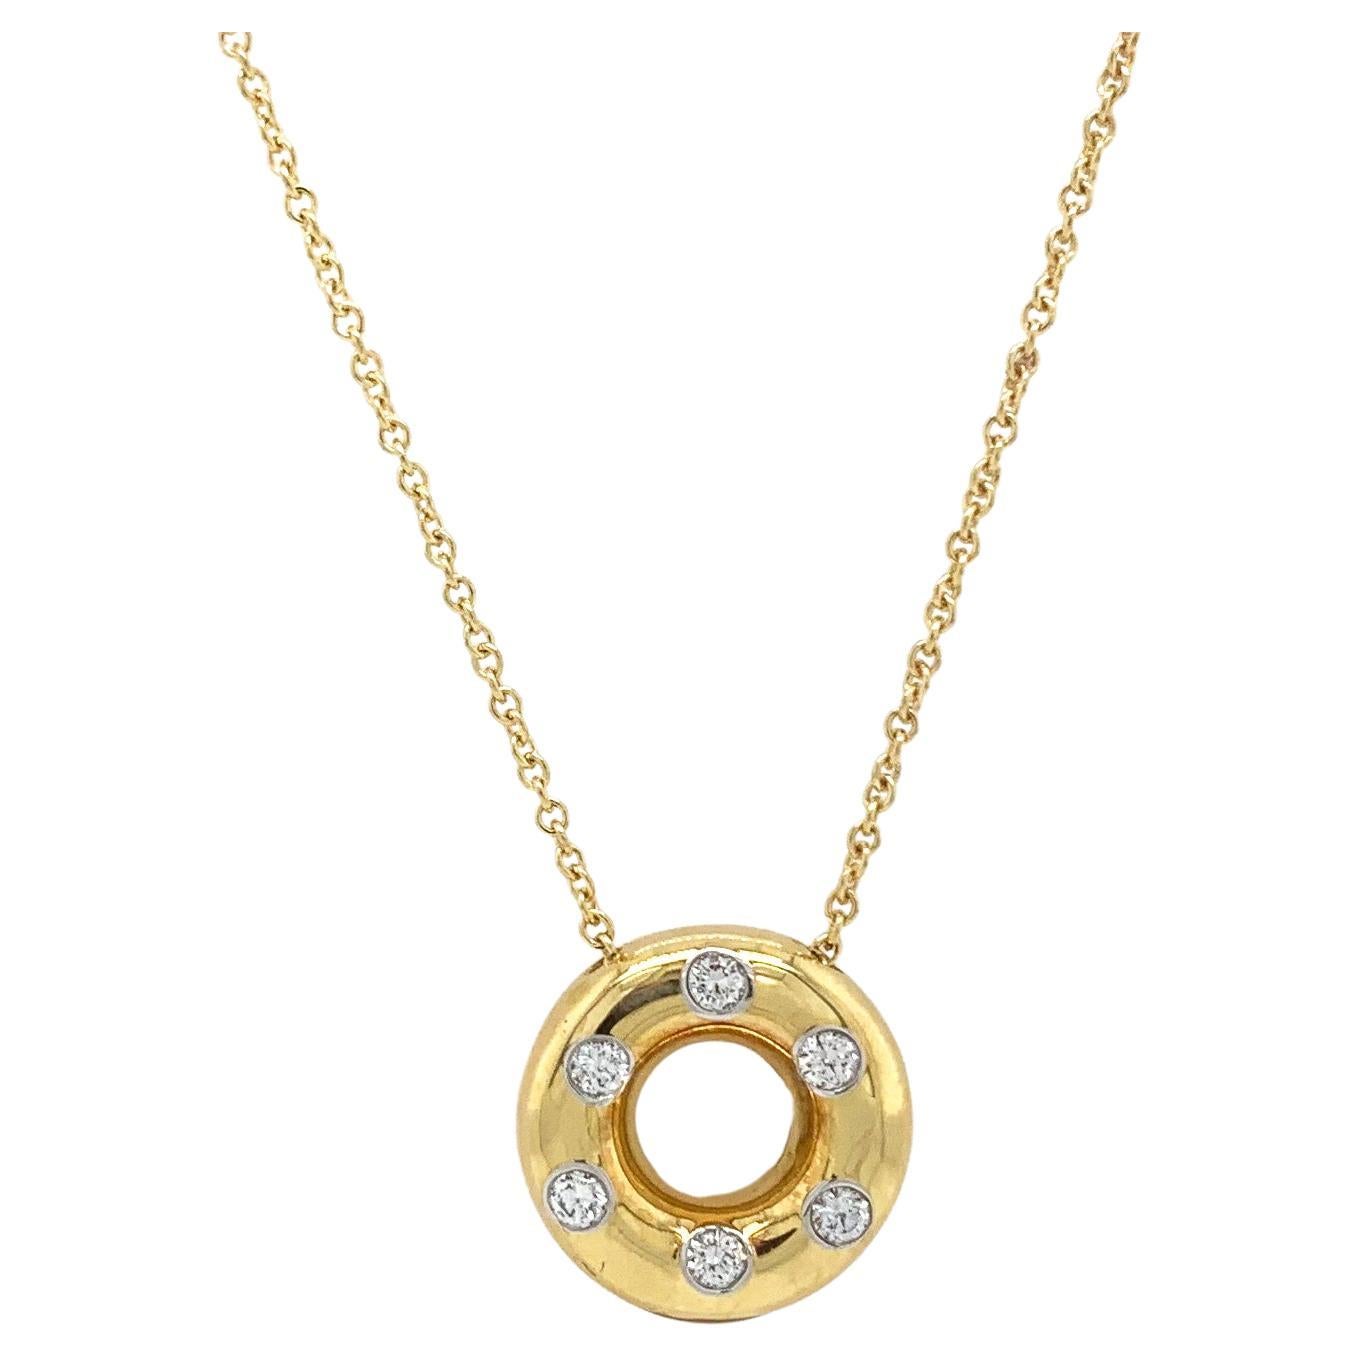 Tiffany & Company Etoile Diamond Pendant Necklace in 18k Yellow Gold